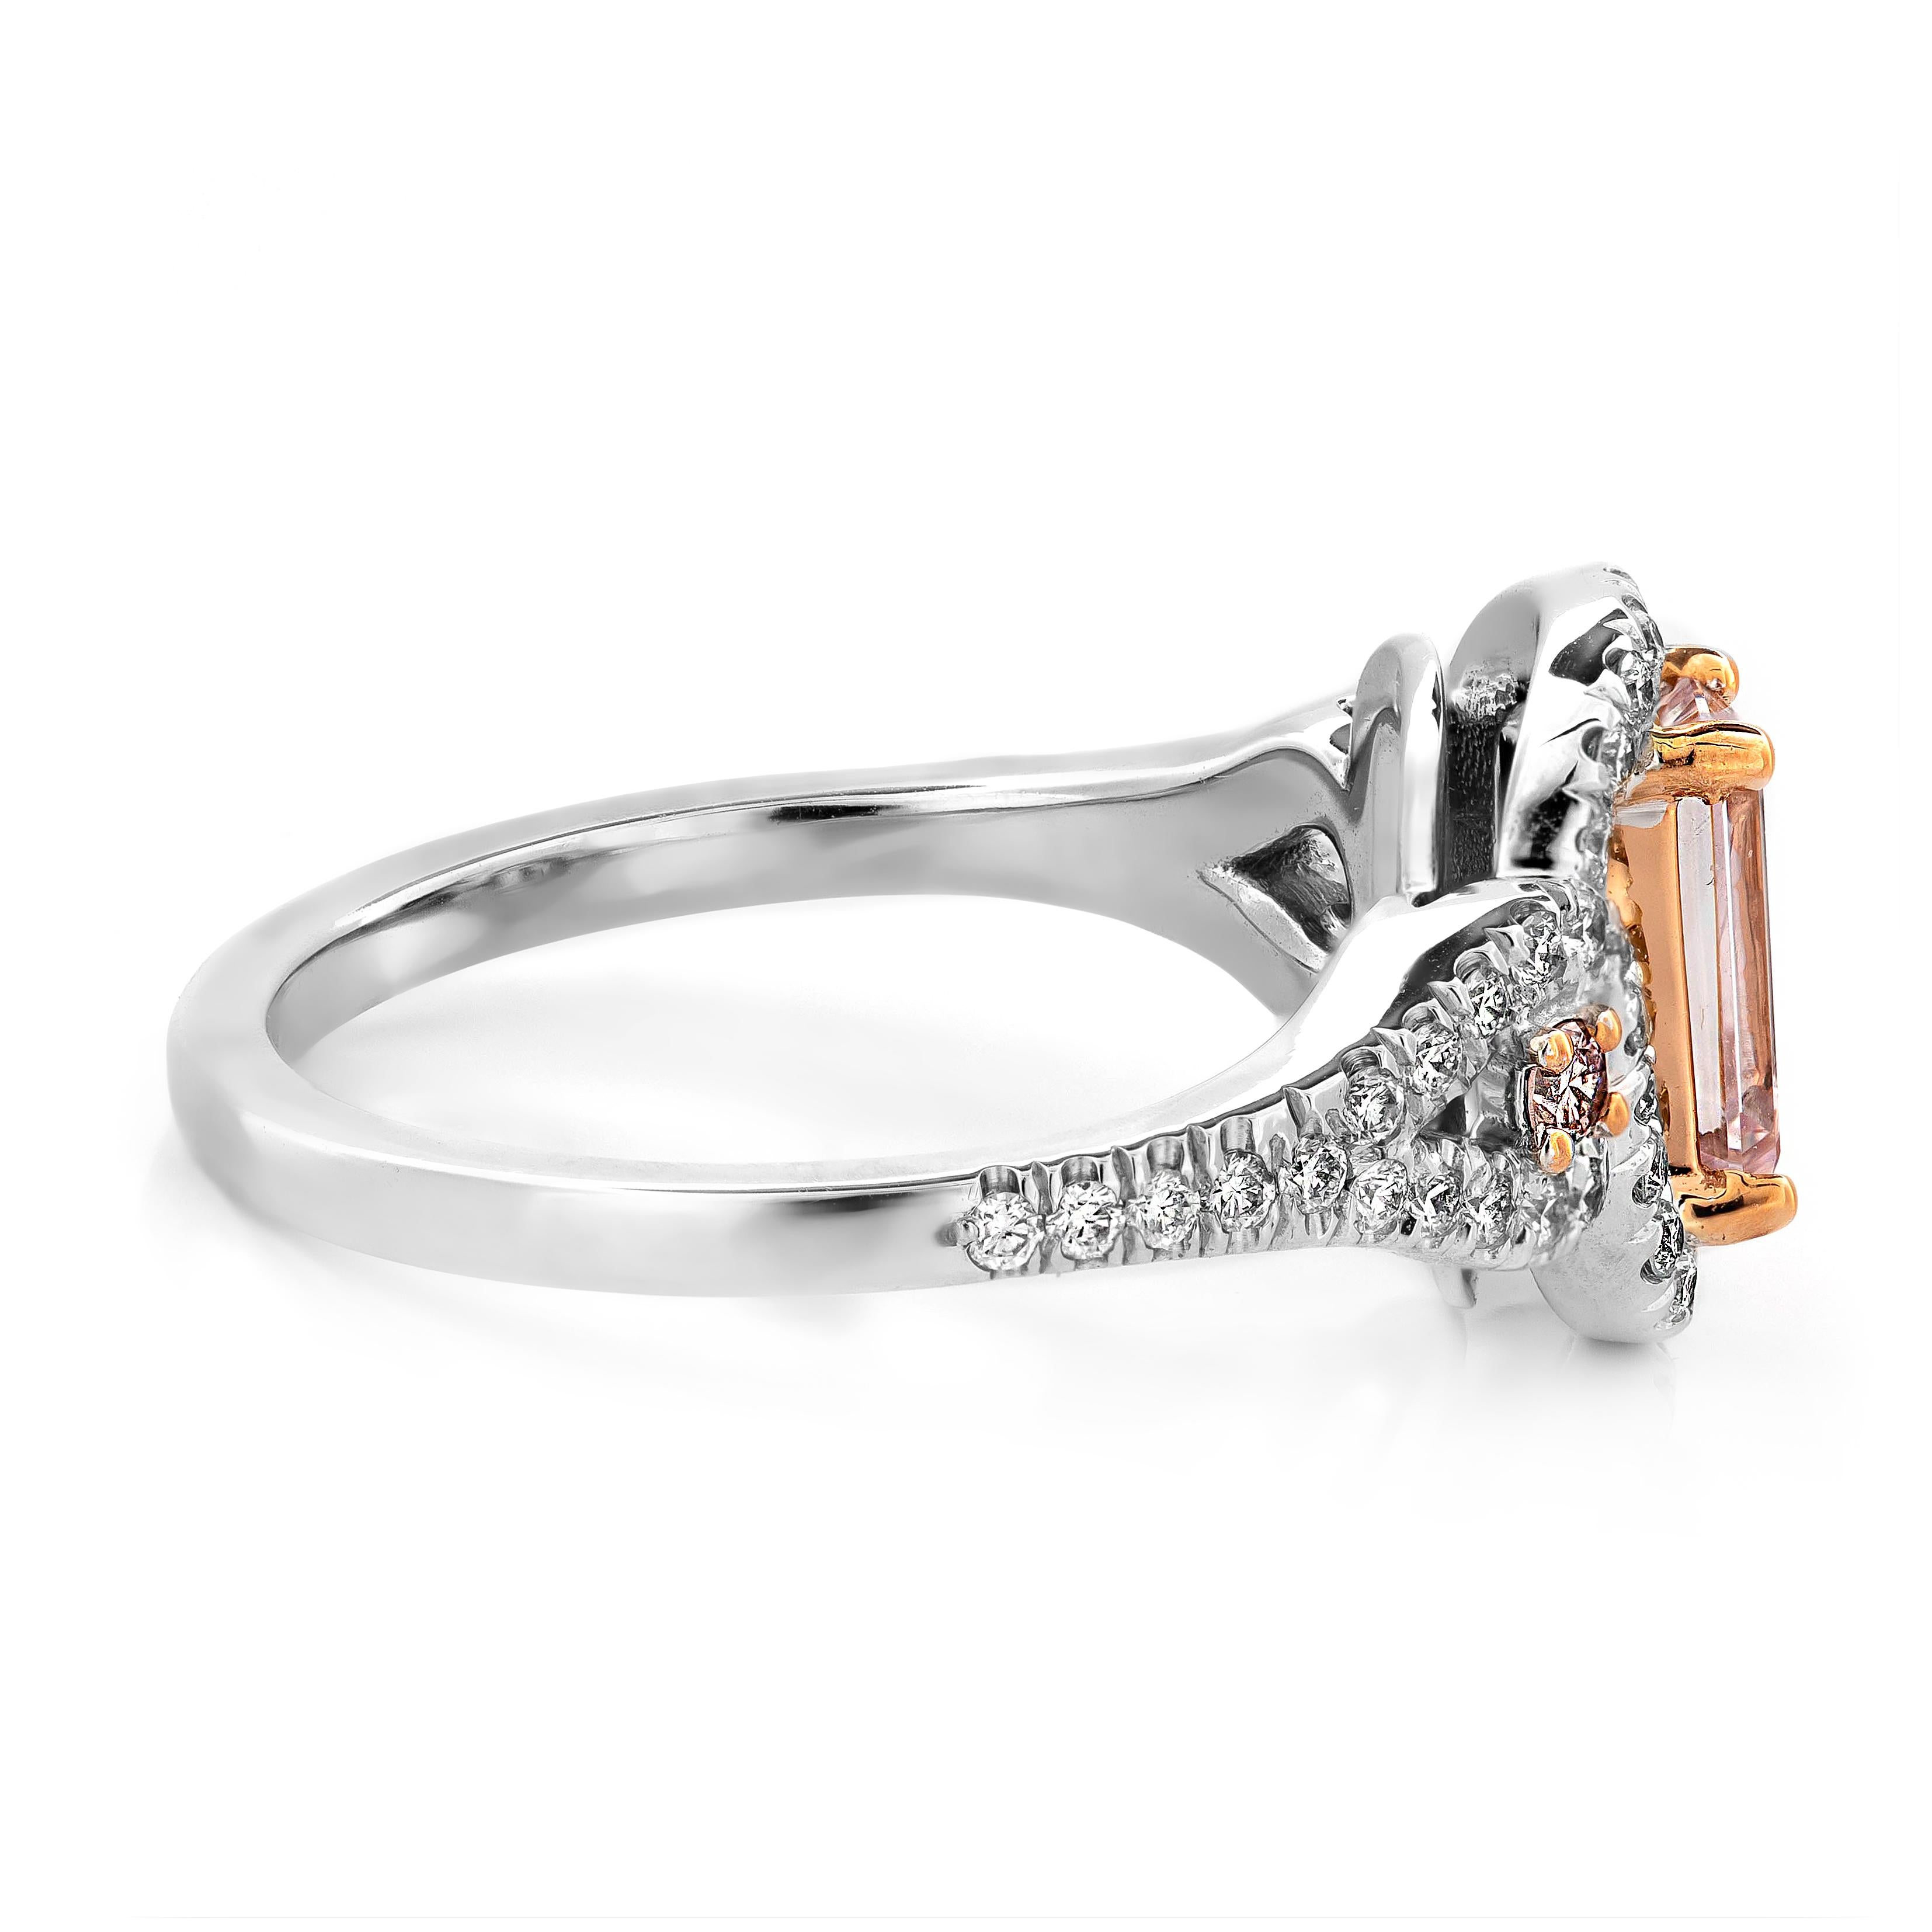 0.83 Carat Fancy Pink Diamond Ring Certified by HRD Antwerp and GWlabs 1